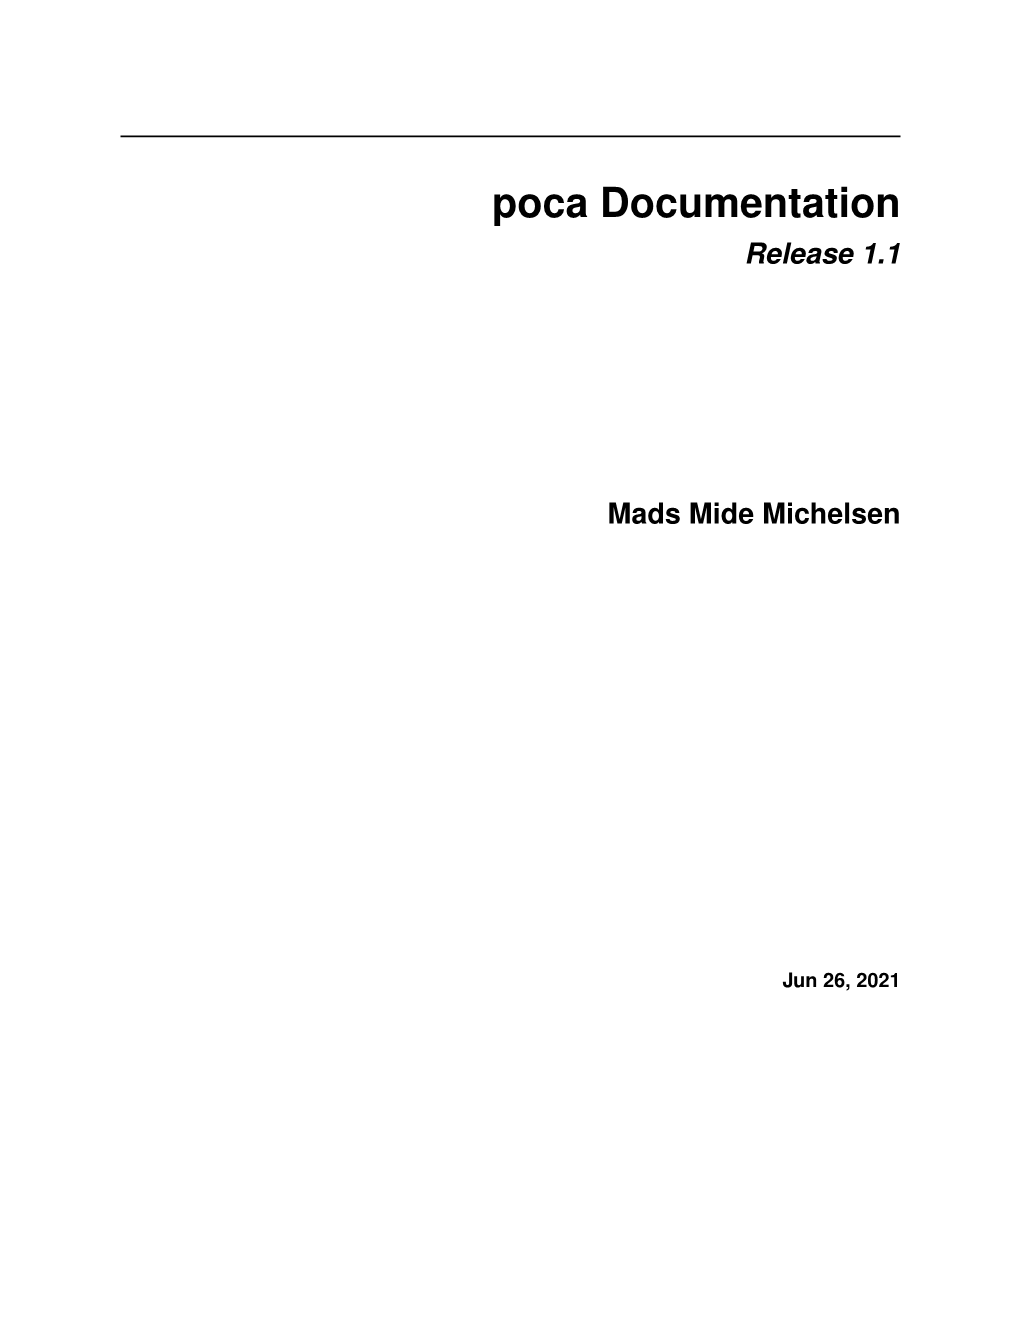 Poca Documentation Release 1.1